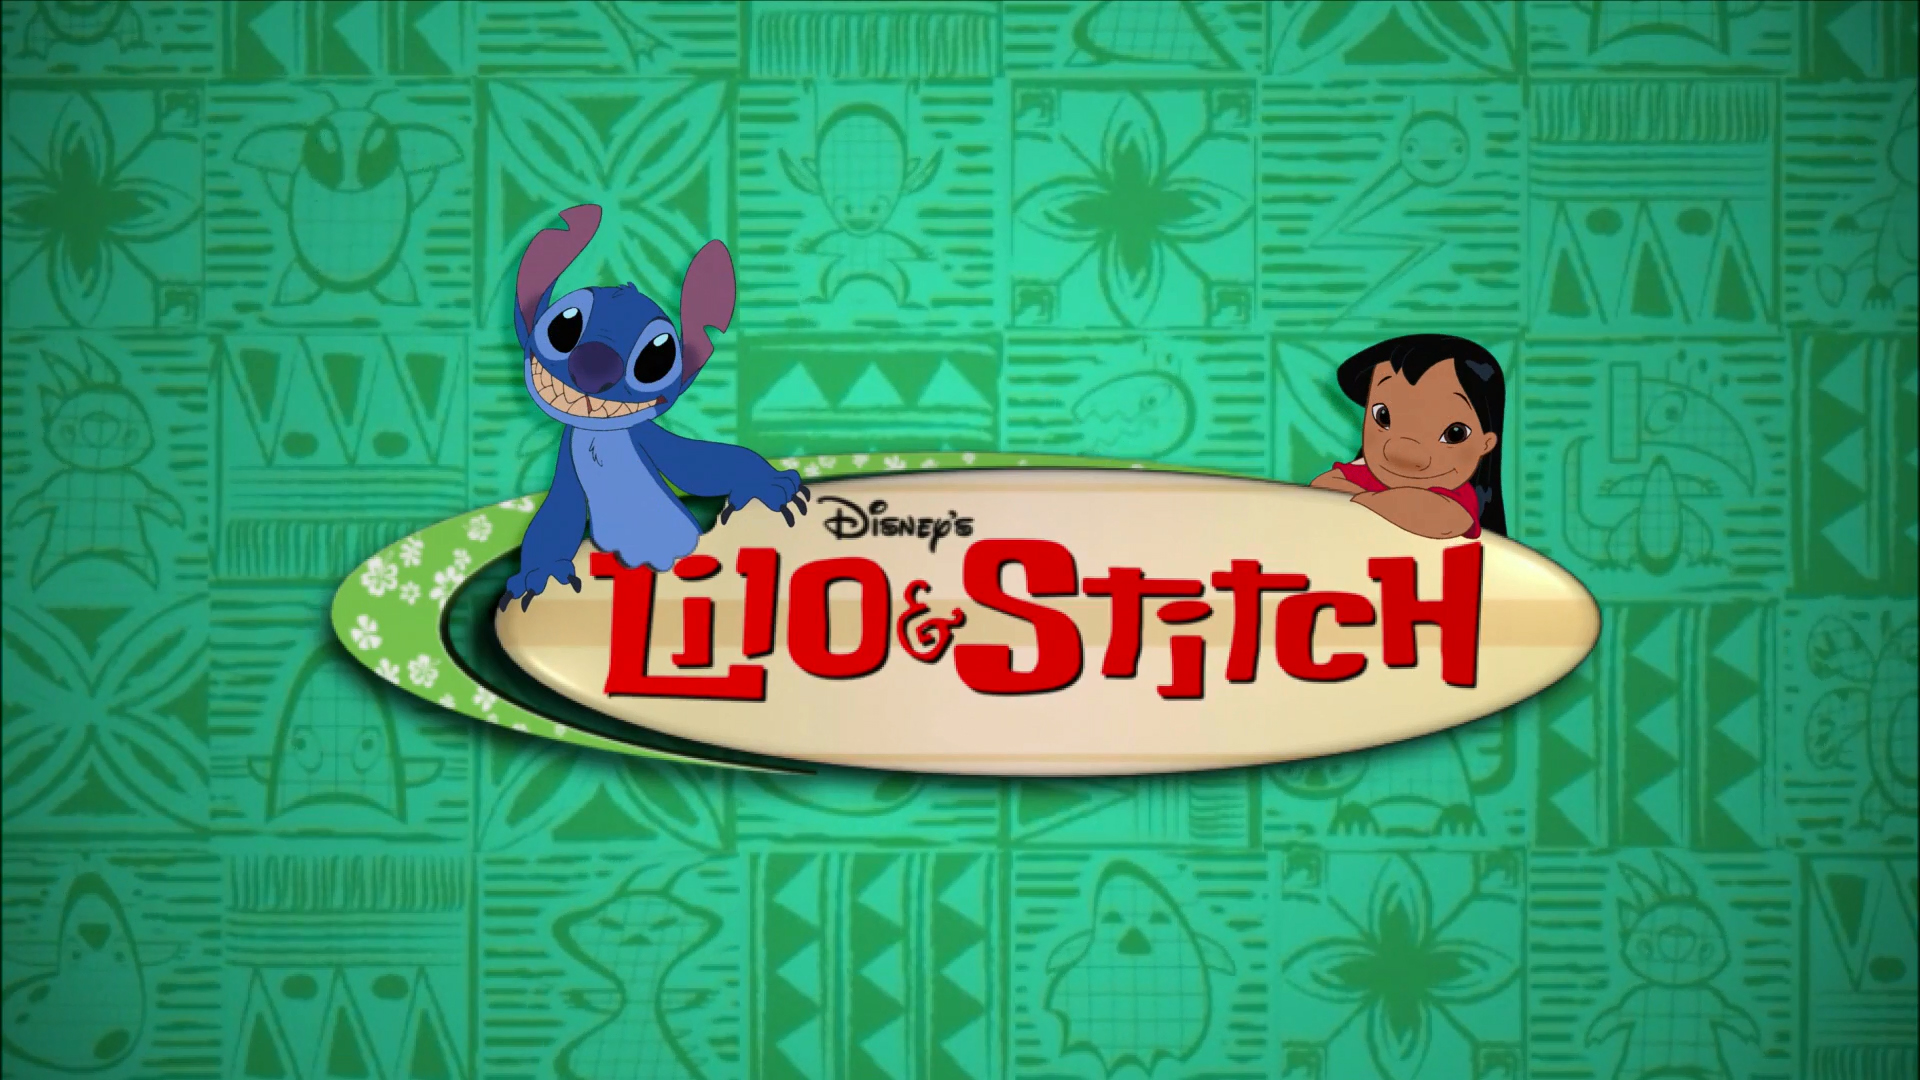 Lilo & Stitch Hawaiian Adventure - Old Games Download